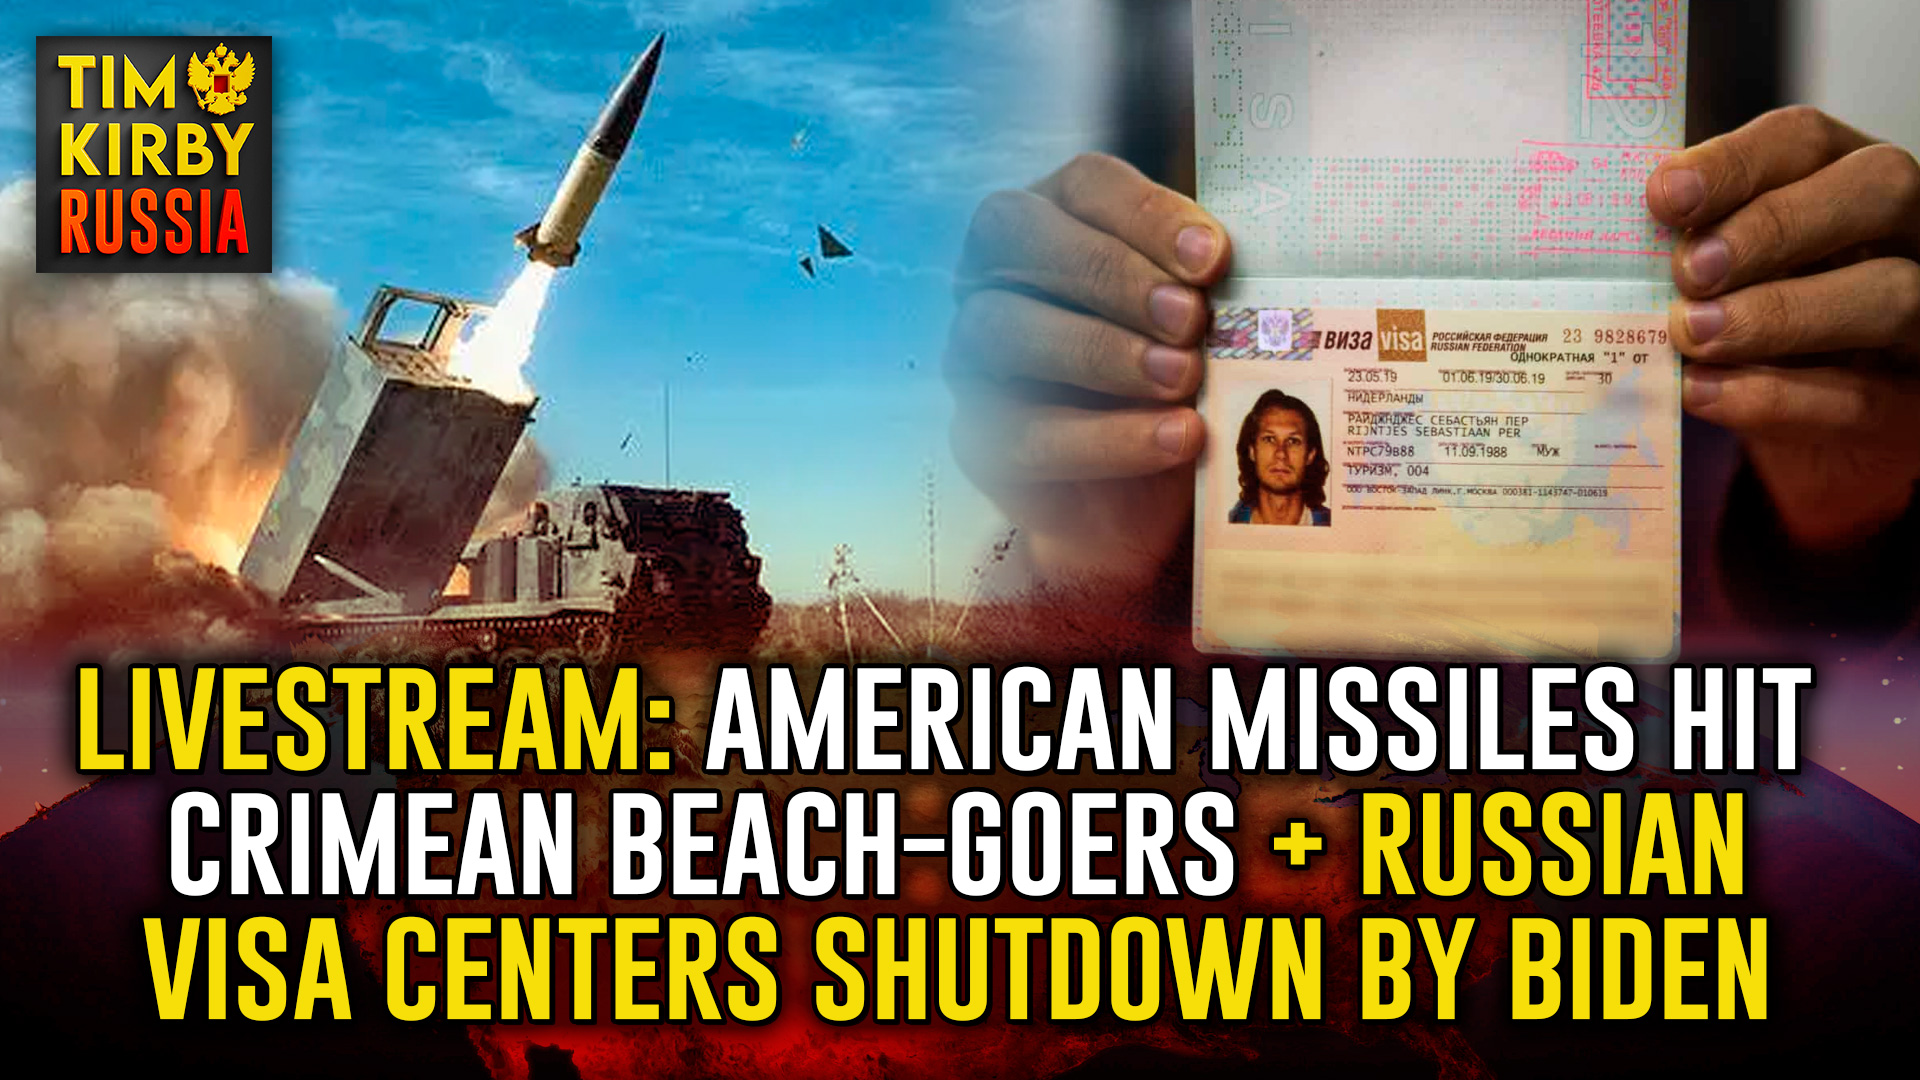 "American missiles hit Crimean beach-goers + Russian visa centers shutdown by Biden"